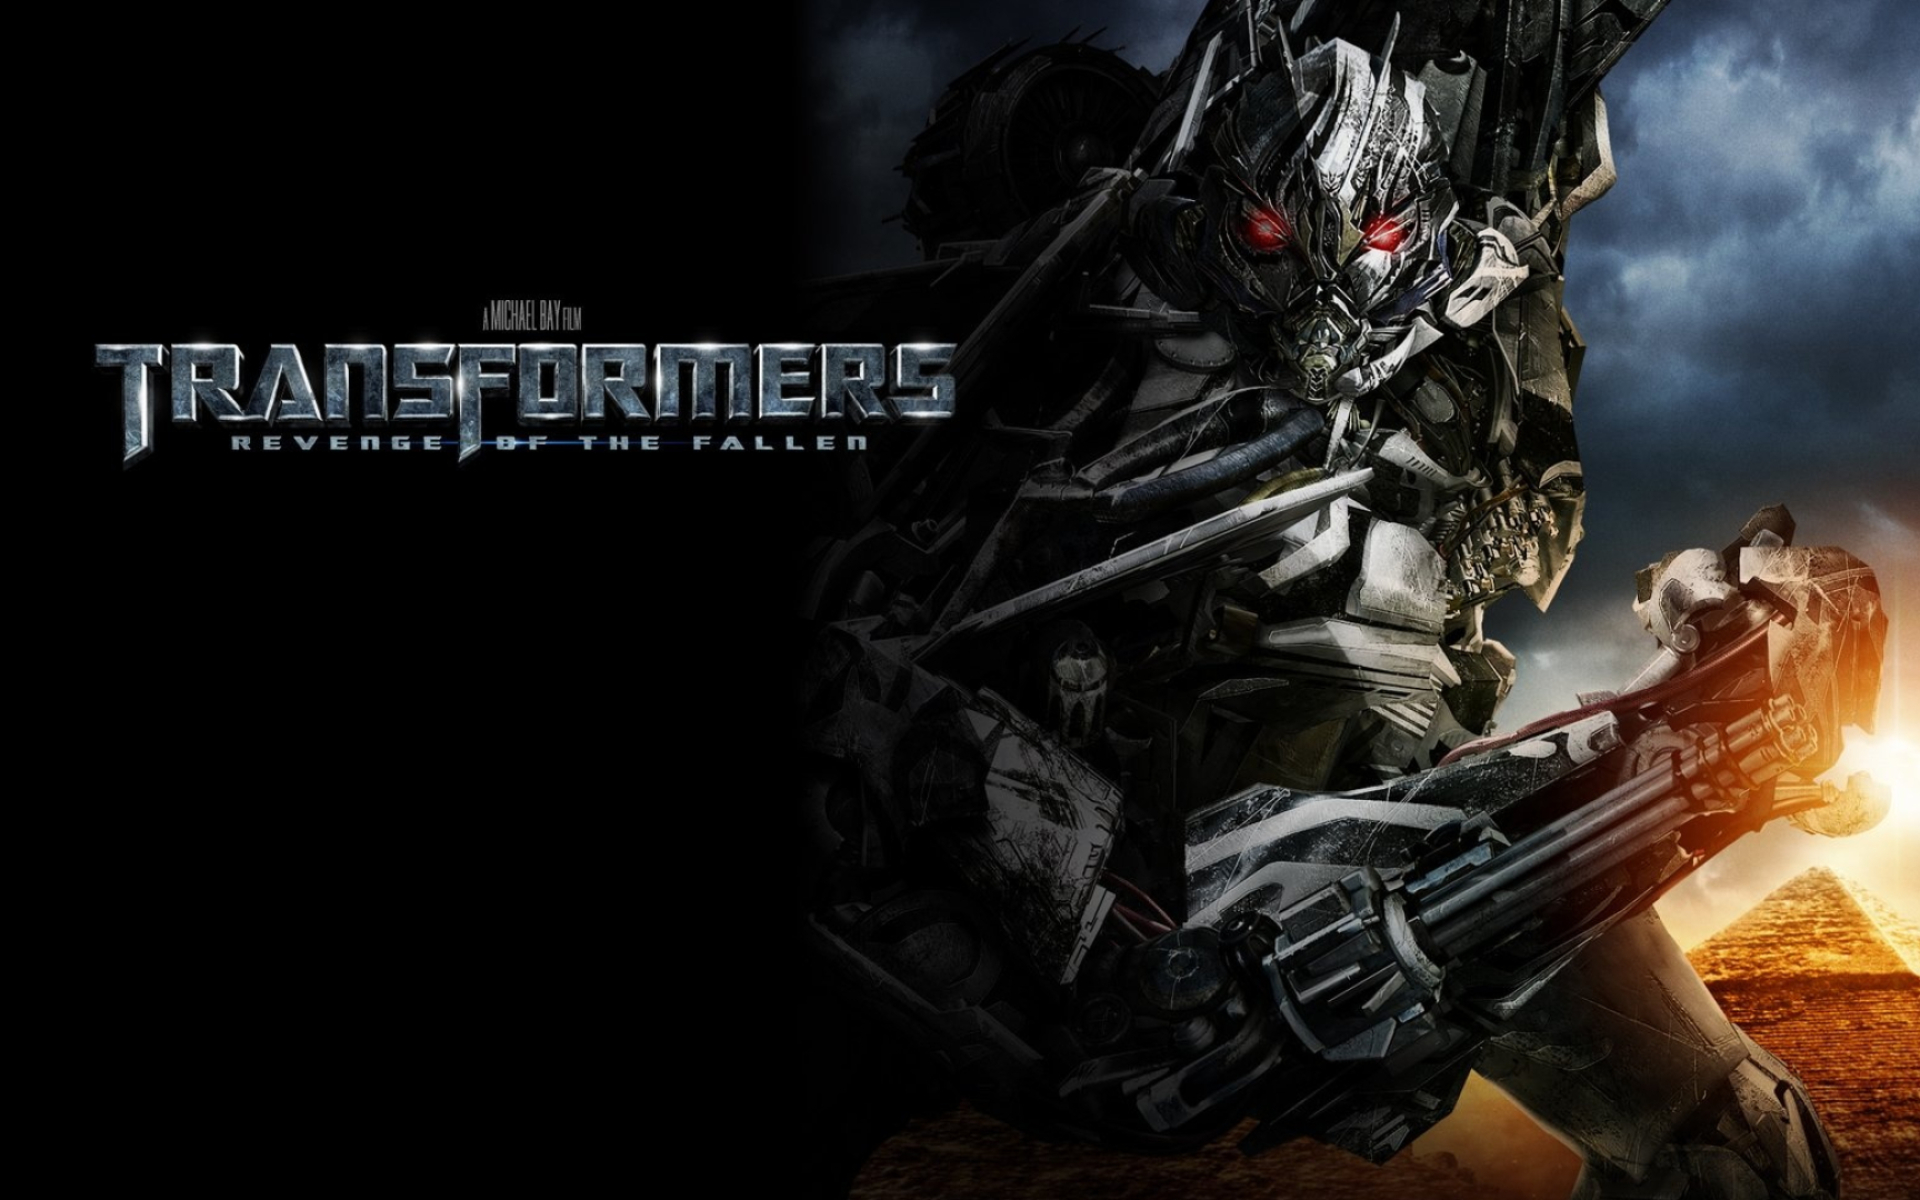 Megatron (Transformers), High definition wallpapers, Background images, Captivating visuals, 1920x1200 HD Desktop